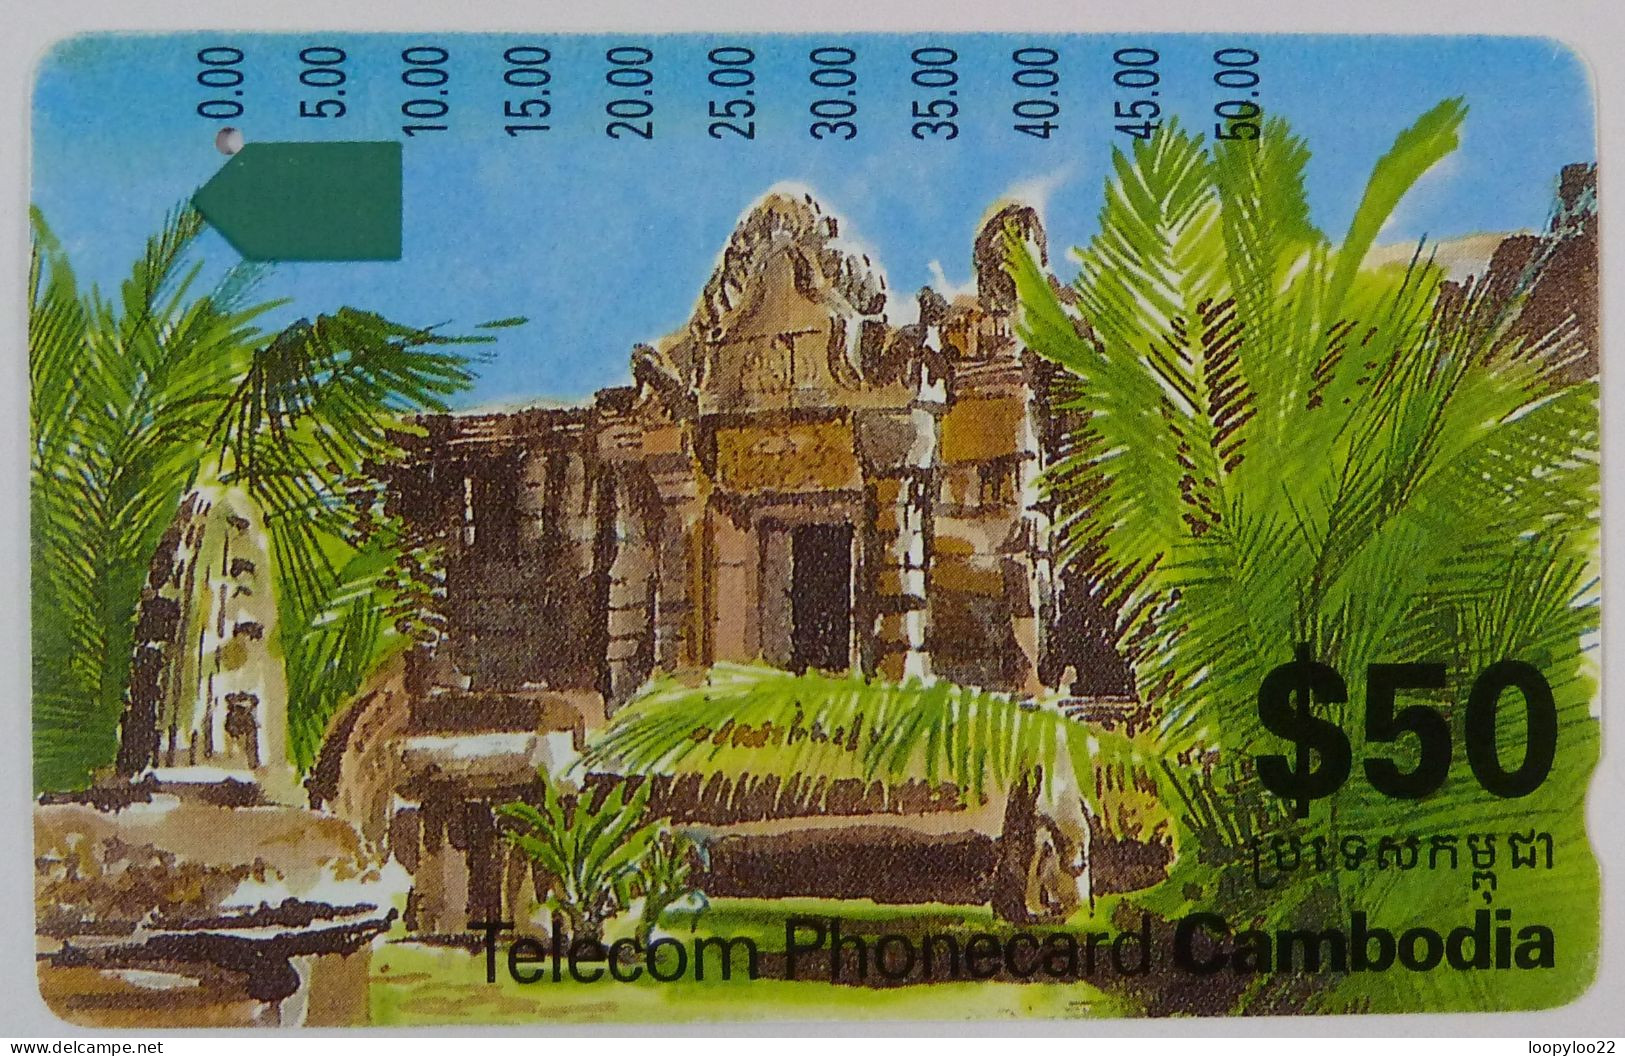 CAMBODIA - Anritsu - OTC - TEMPLE - (ICM3-2-3) - $50 - Used - Cambodia